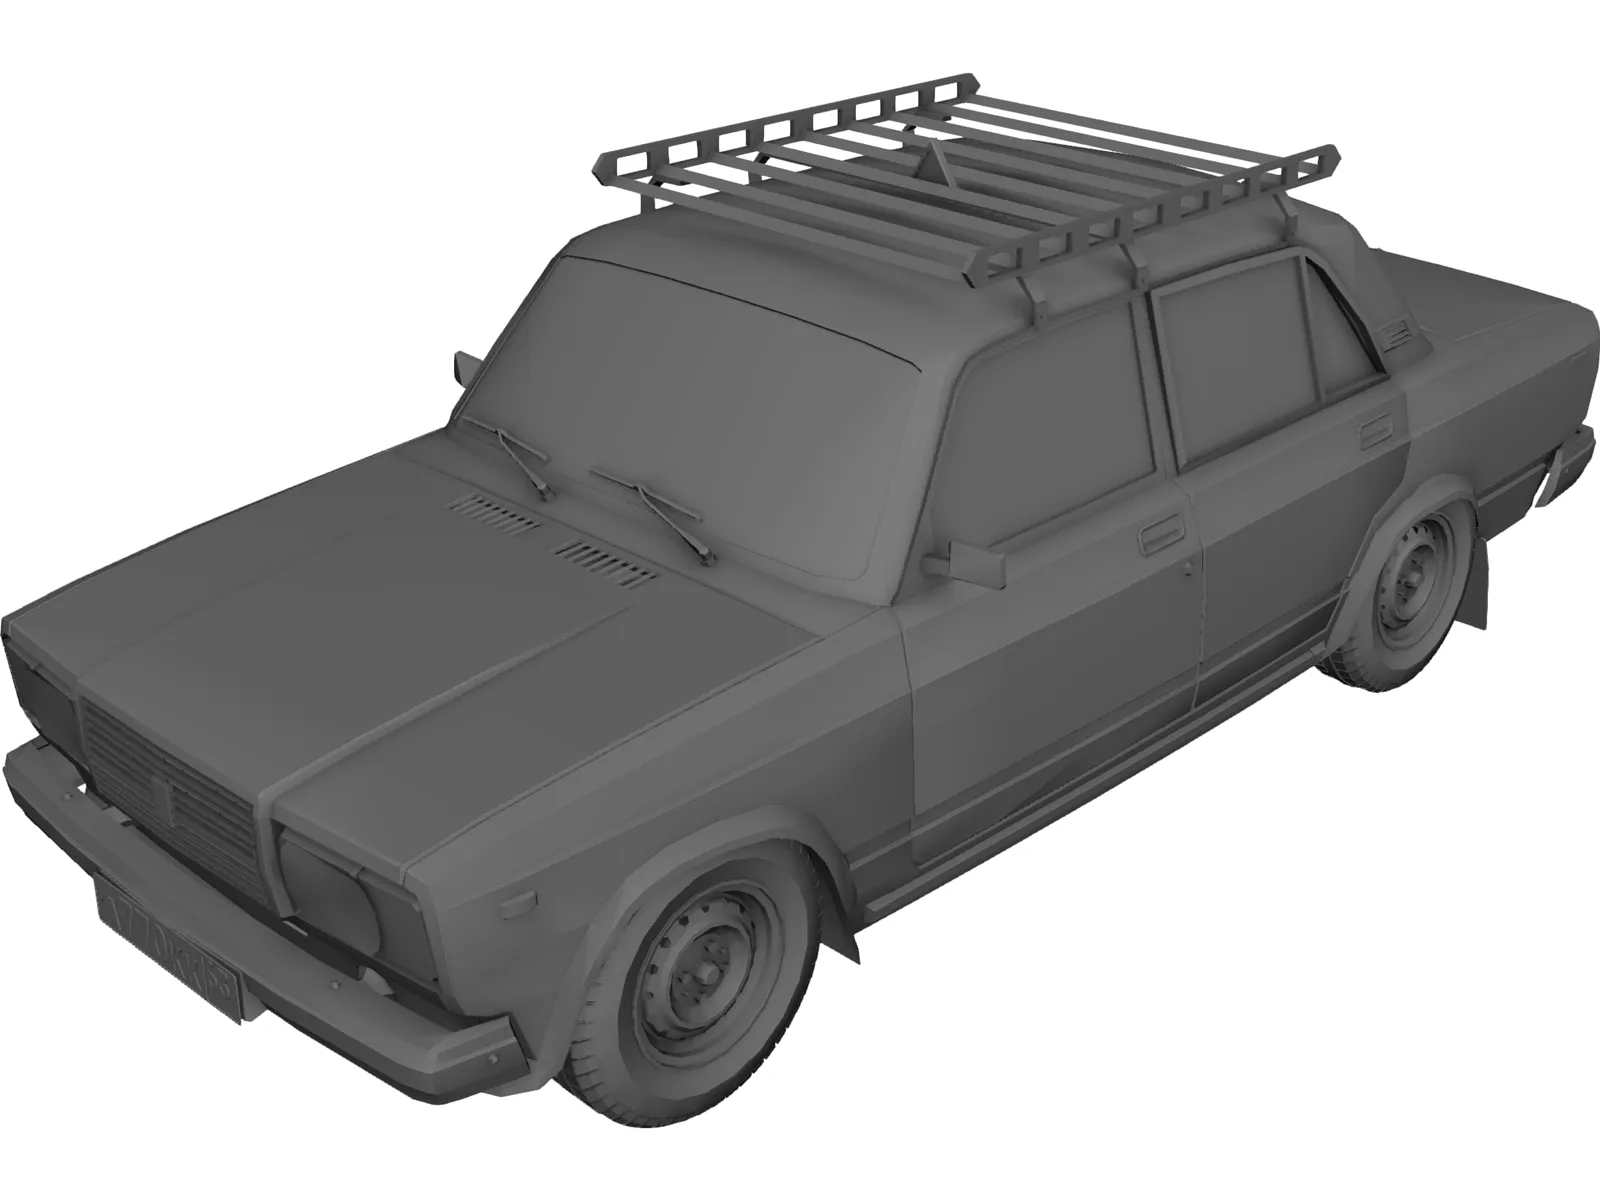 VAZ 2105 Lada 3D Model